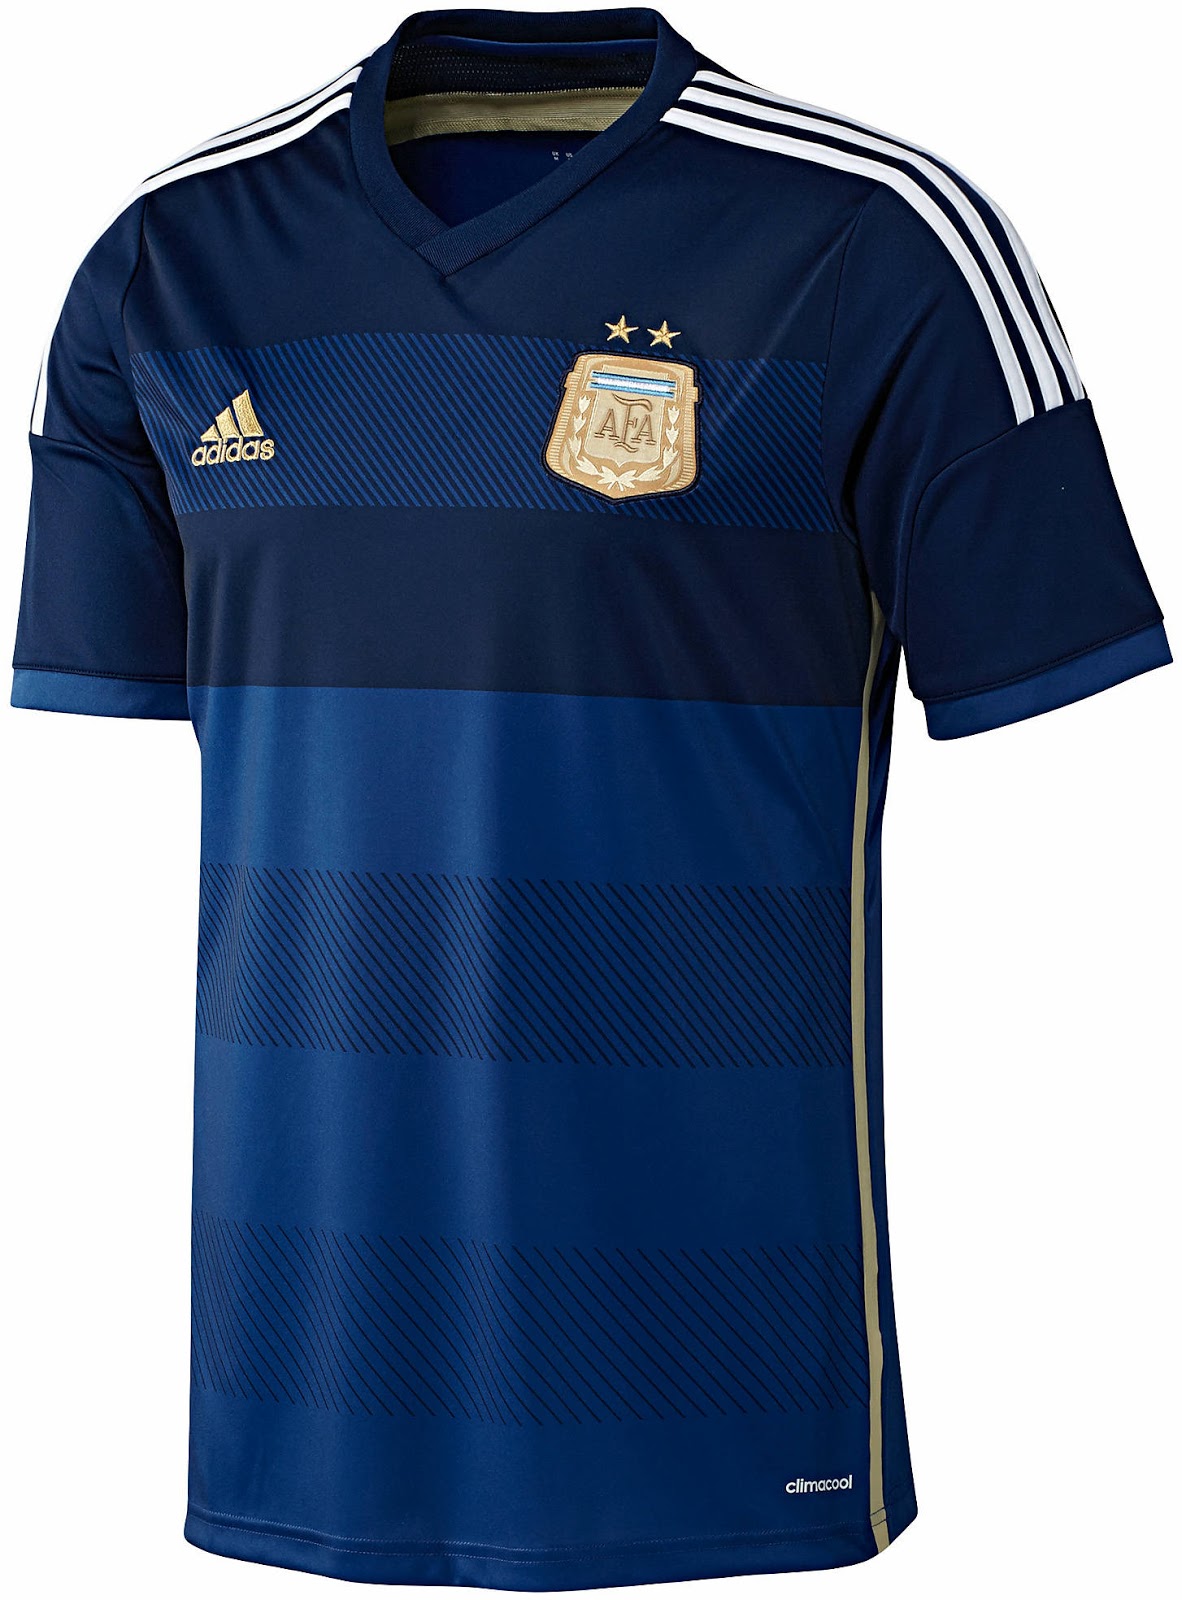 2014 World Cup Argentina Soccer Jersey Football Jersey Home/Away | eBay